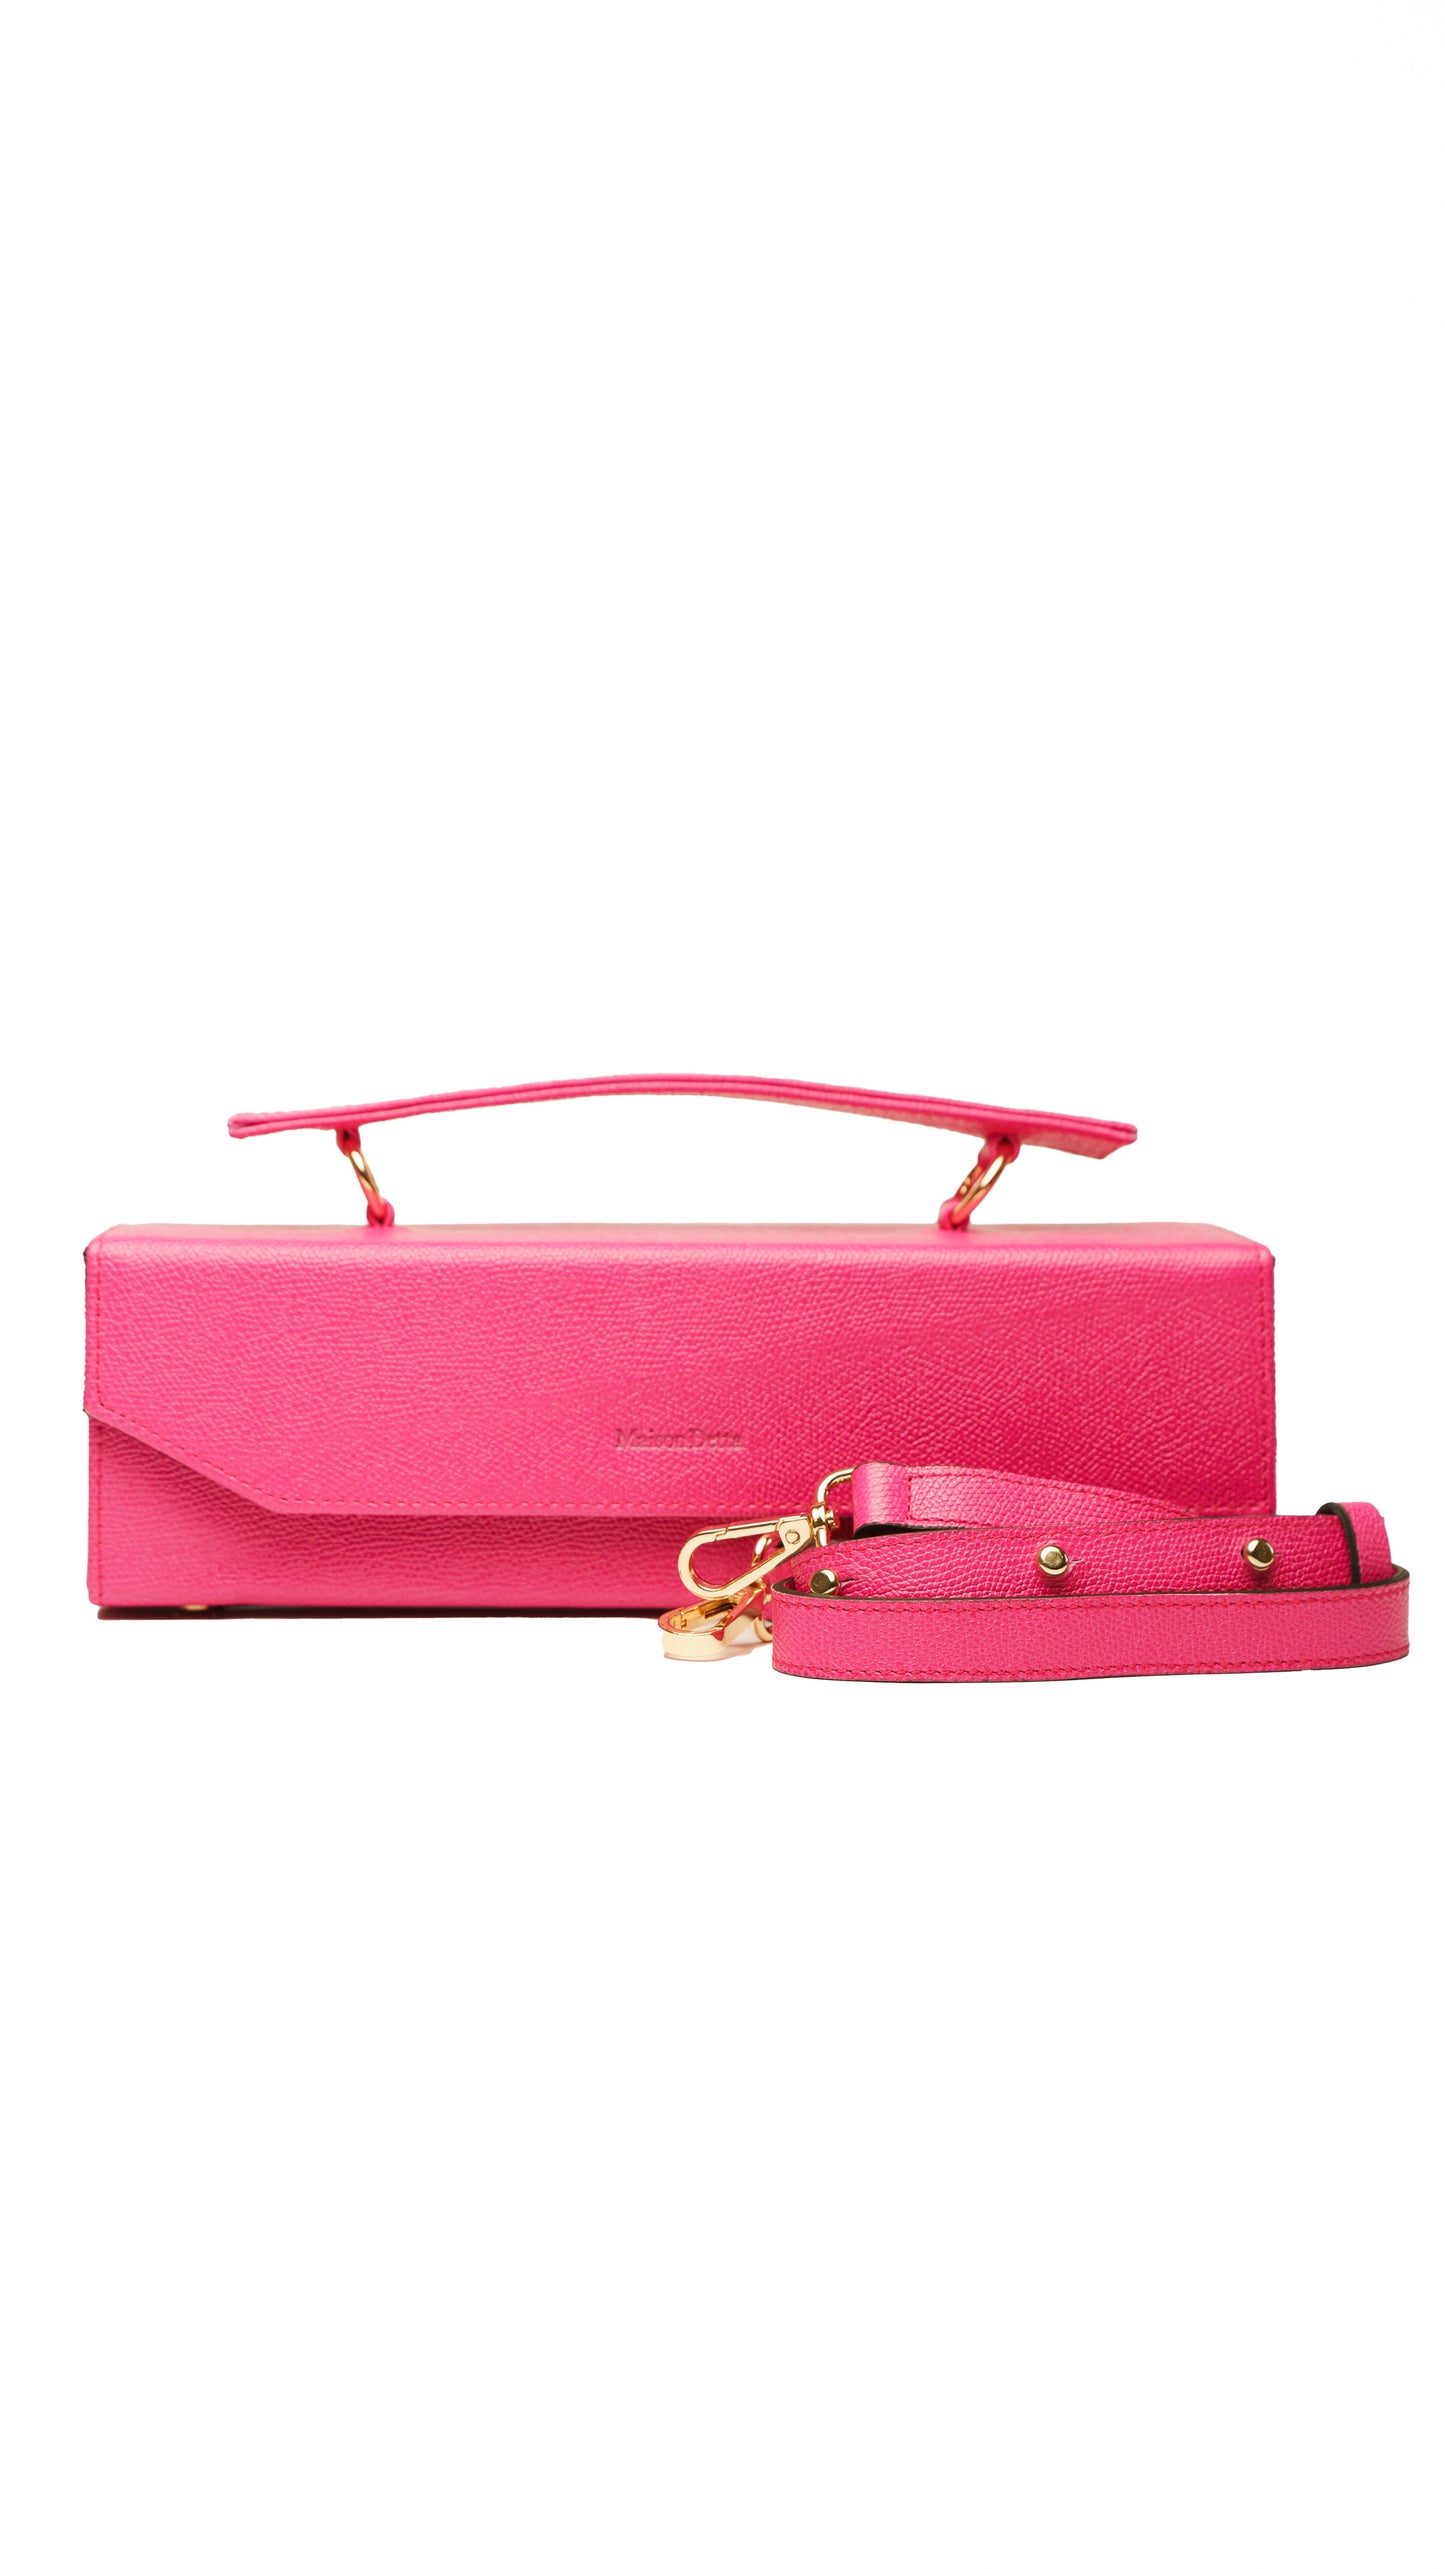 The Tita Bag - Special Edition, Fuchsia Pink